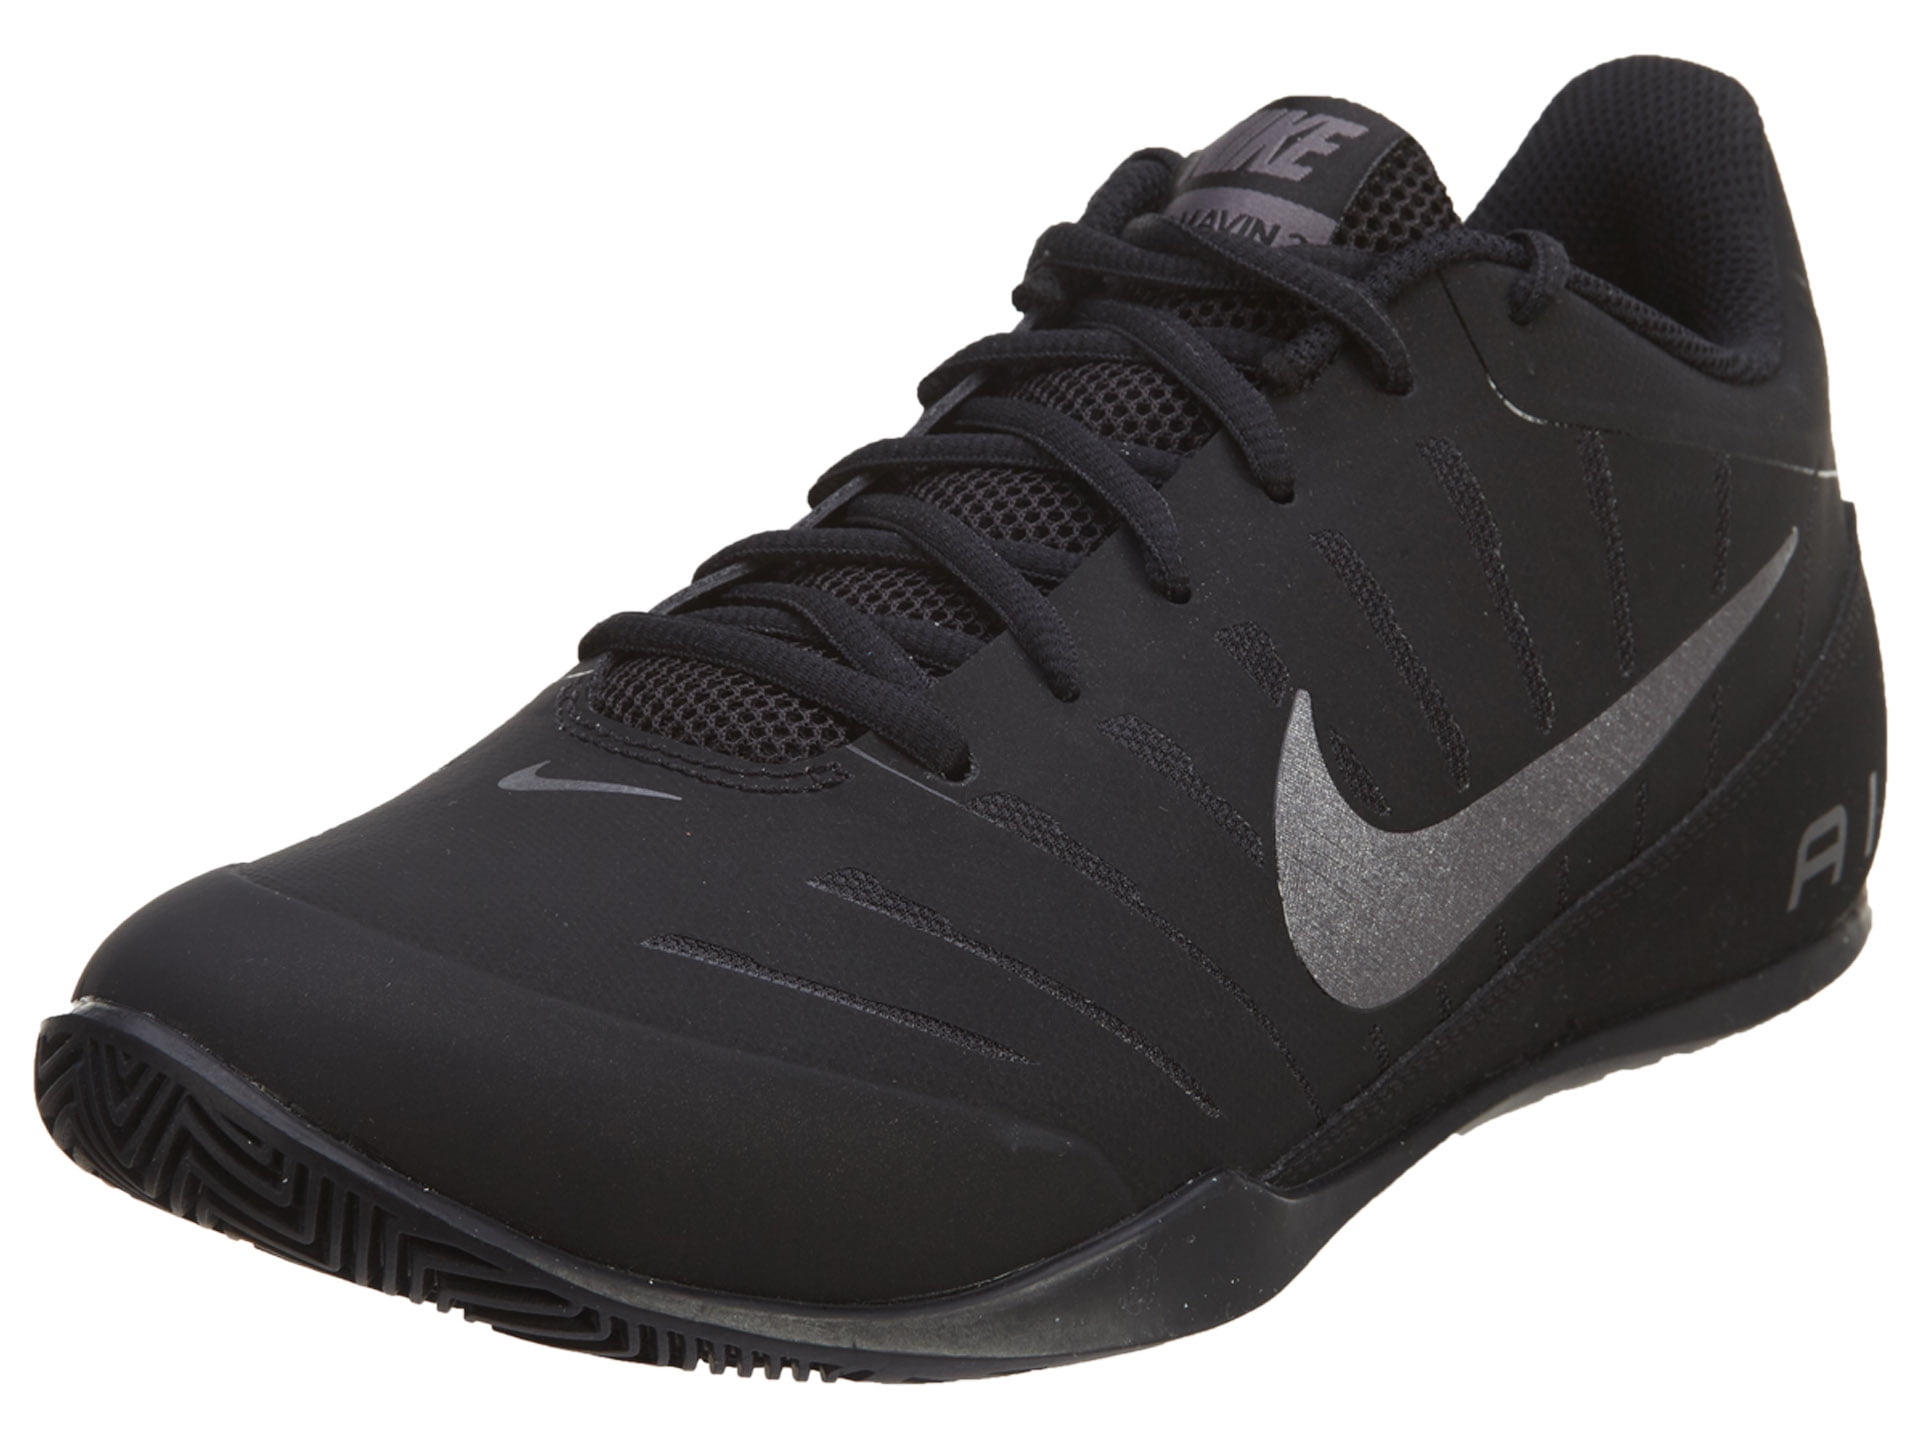 Nike - nike men's air mavin low 2 nbk, black/metallic dark grey, 8 m us -  Walmart.com - Walmart.com